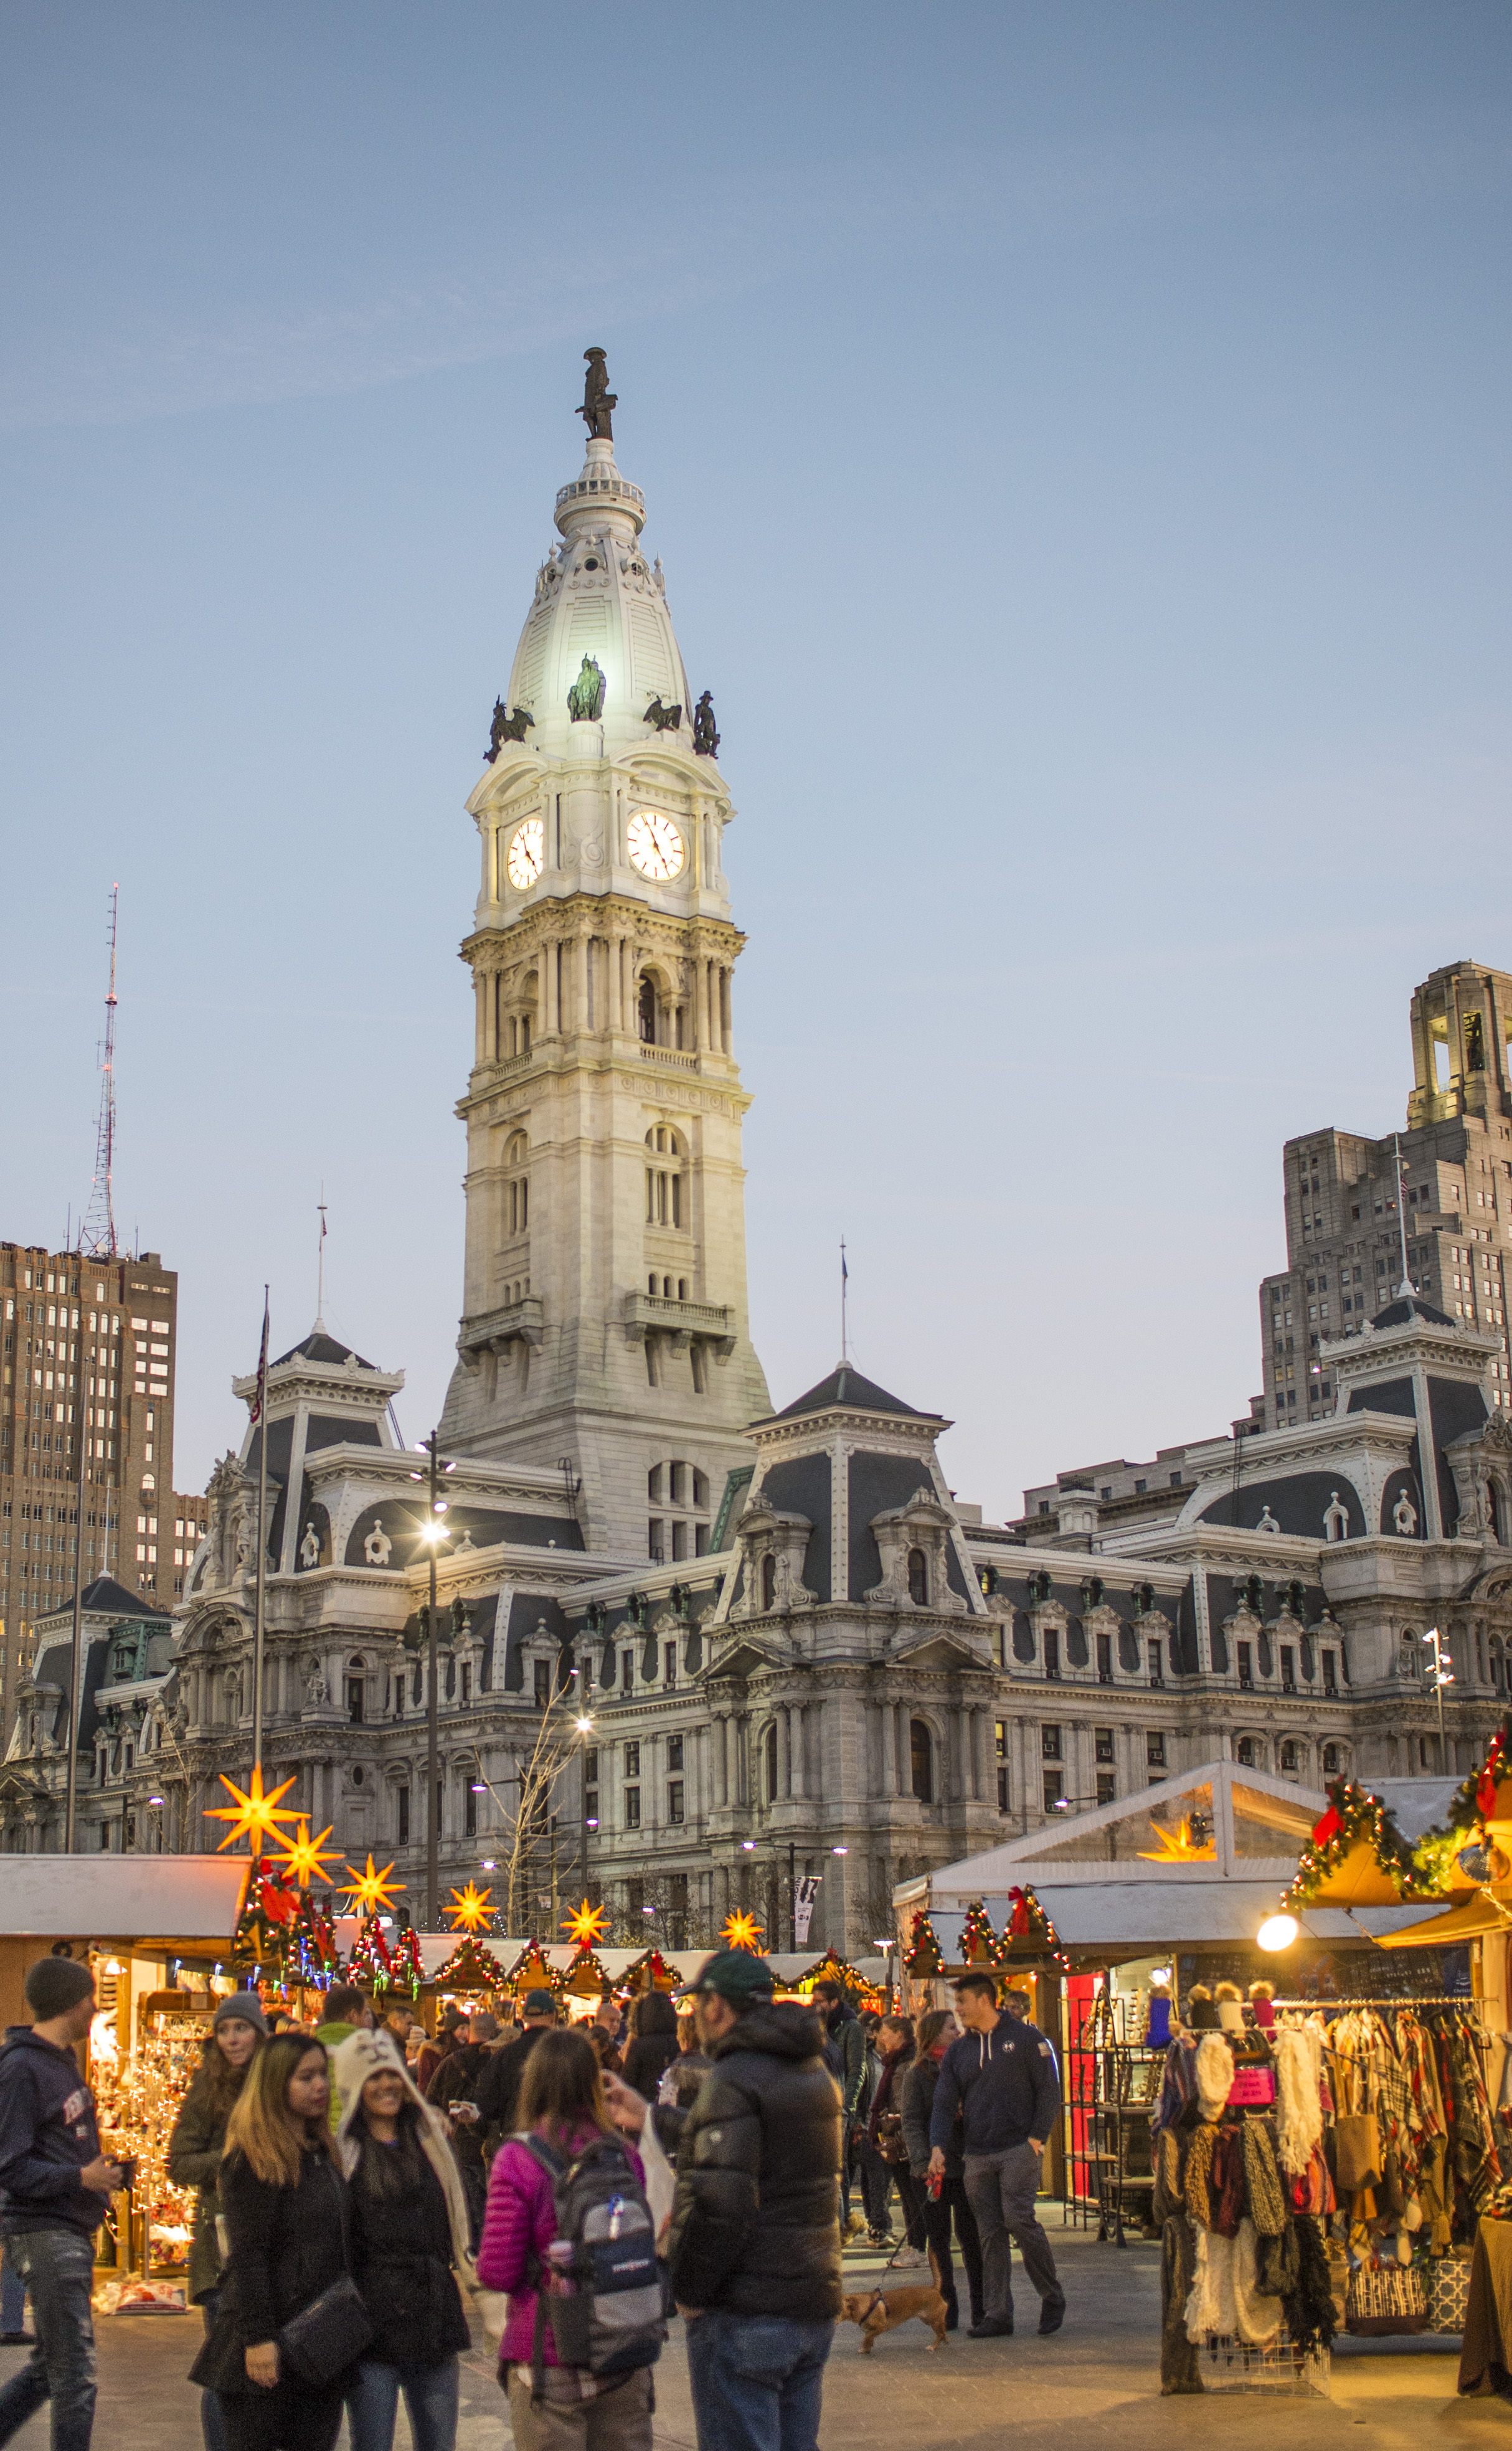 The Christmas Village in Philadelphia - Wikipedia